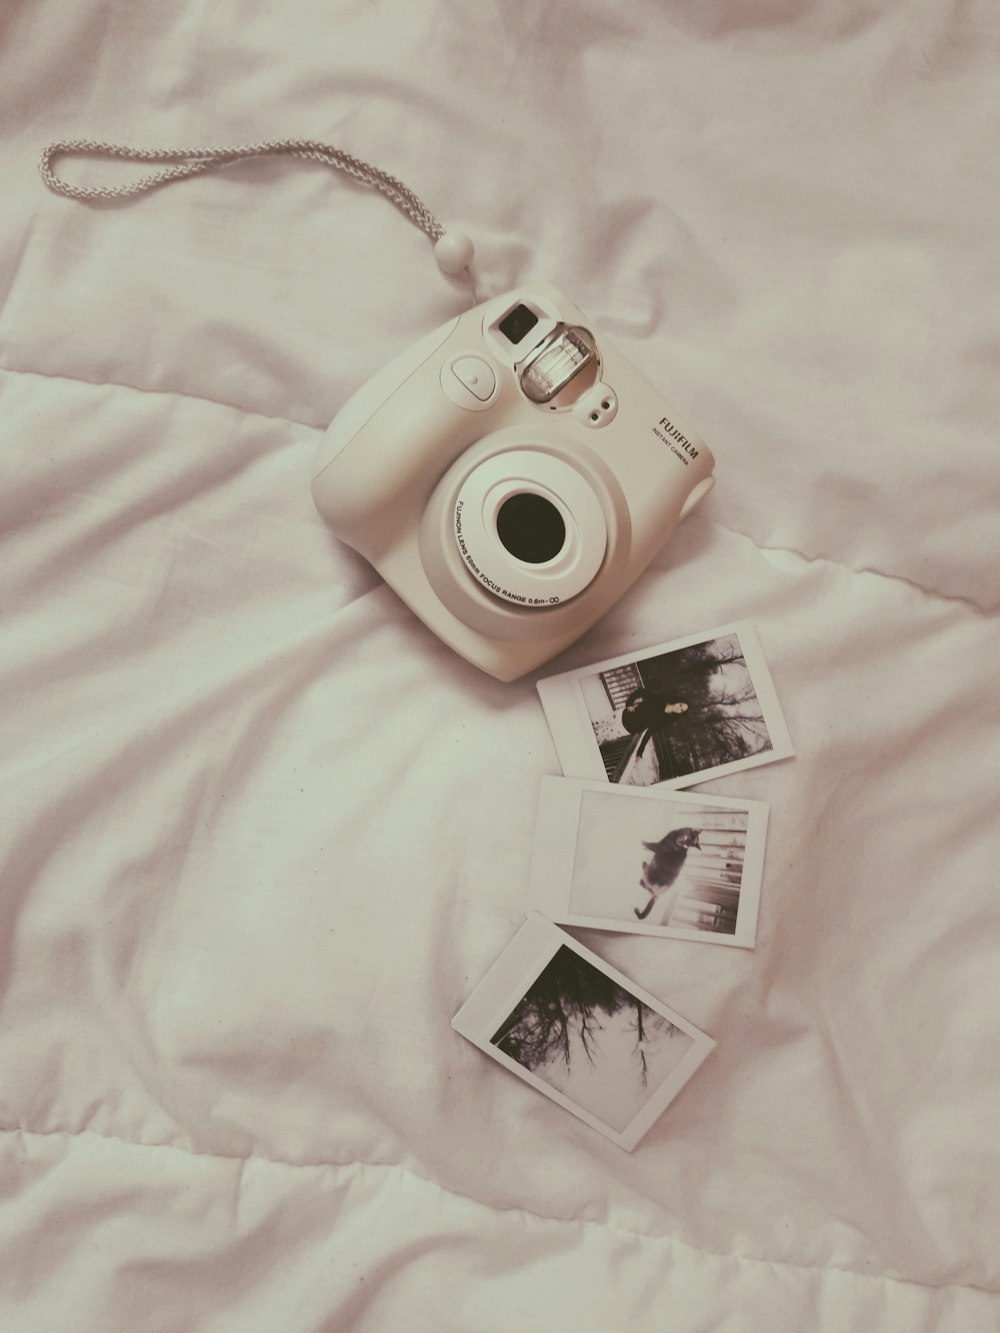 fotocamera istantanea Fujifilm bianca su piumino bianco